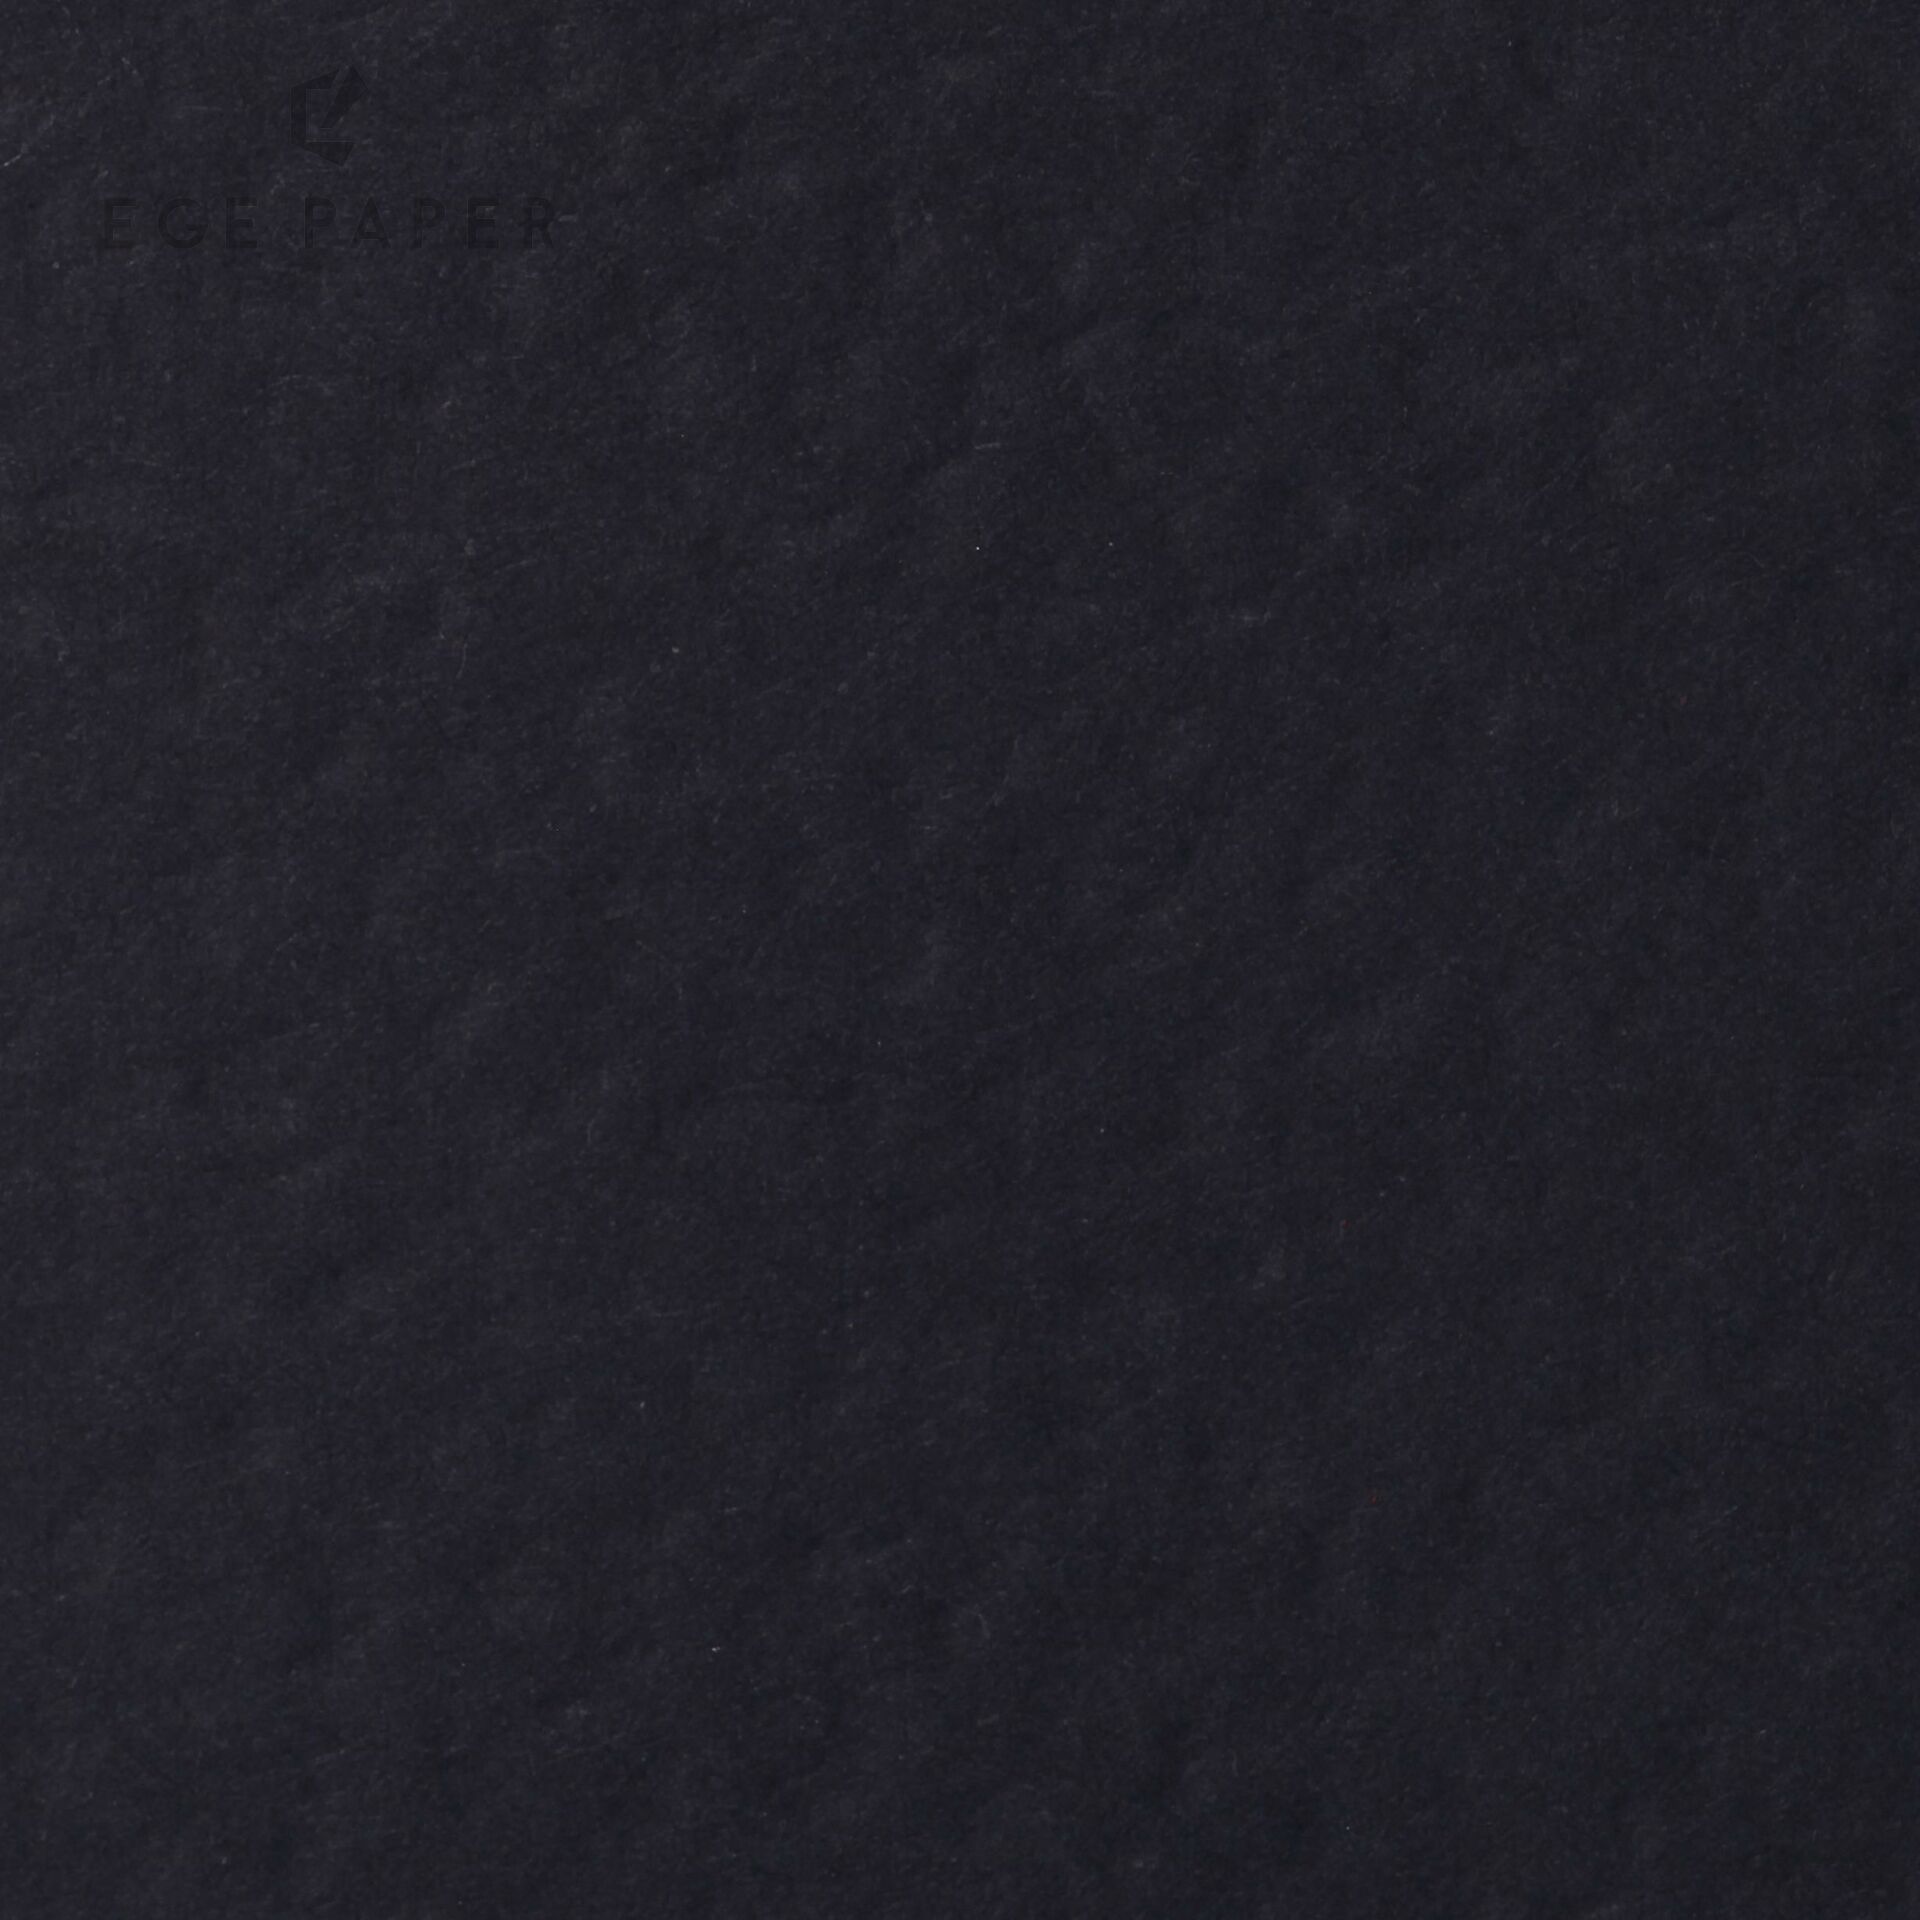 KARTOPU - DARK NAVY BLUE (BURANO) - 120GR - 70X100CM